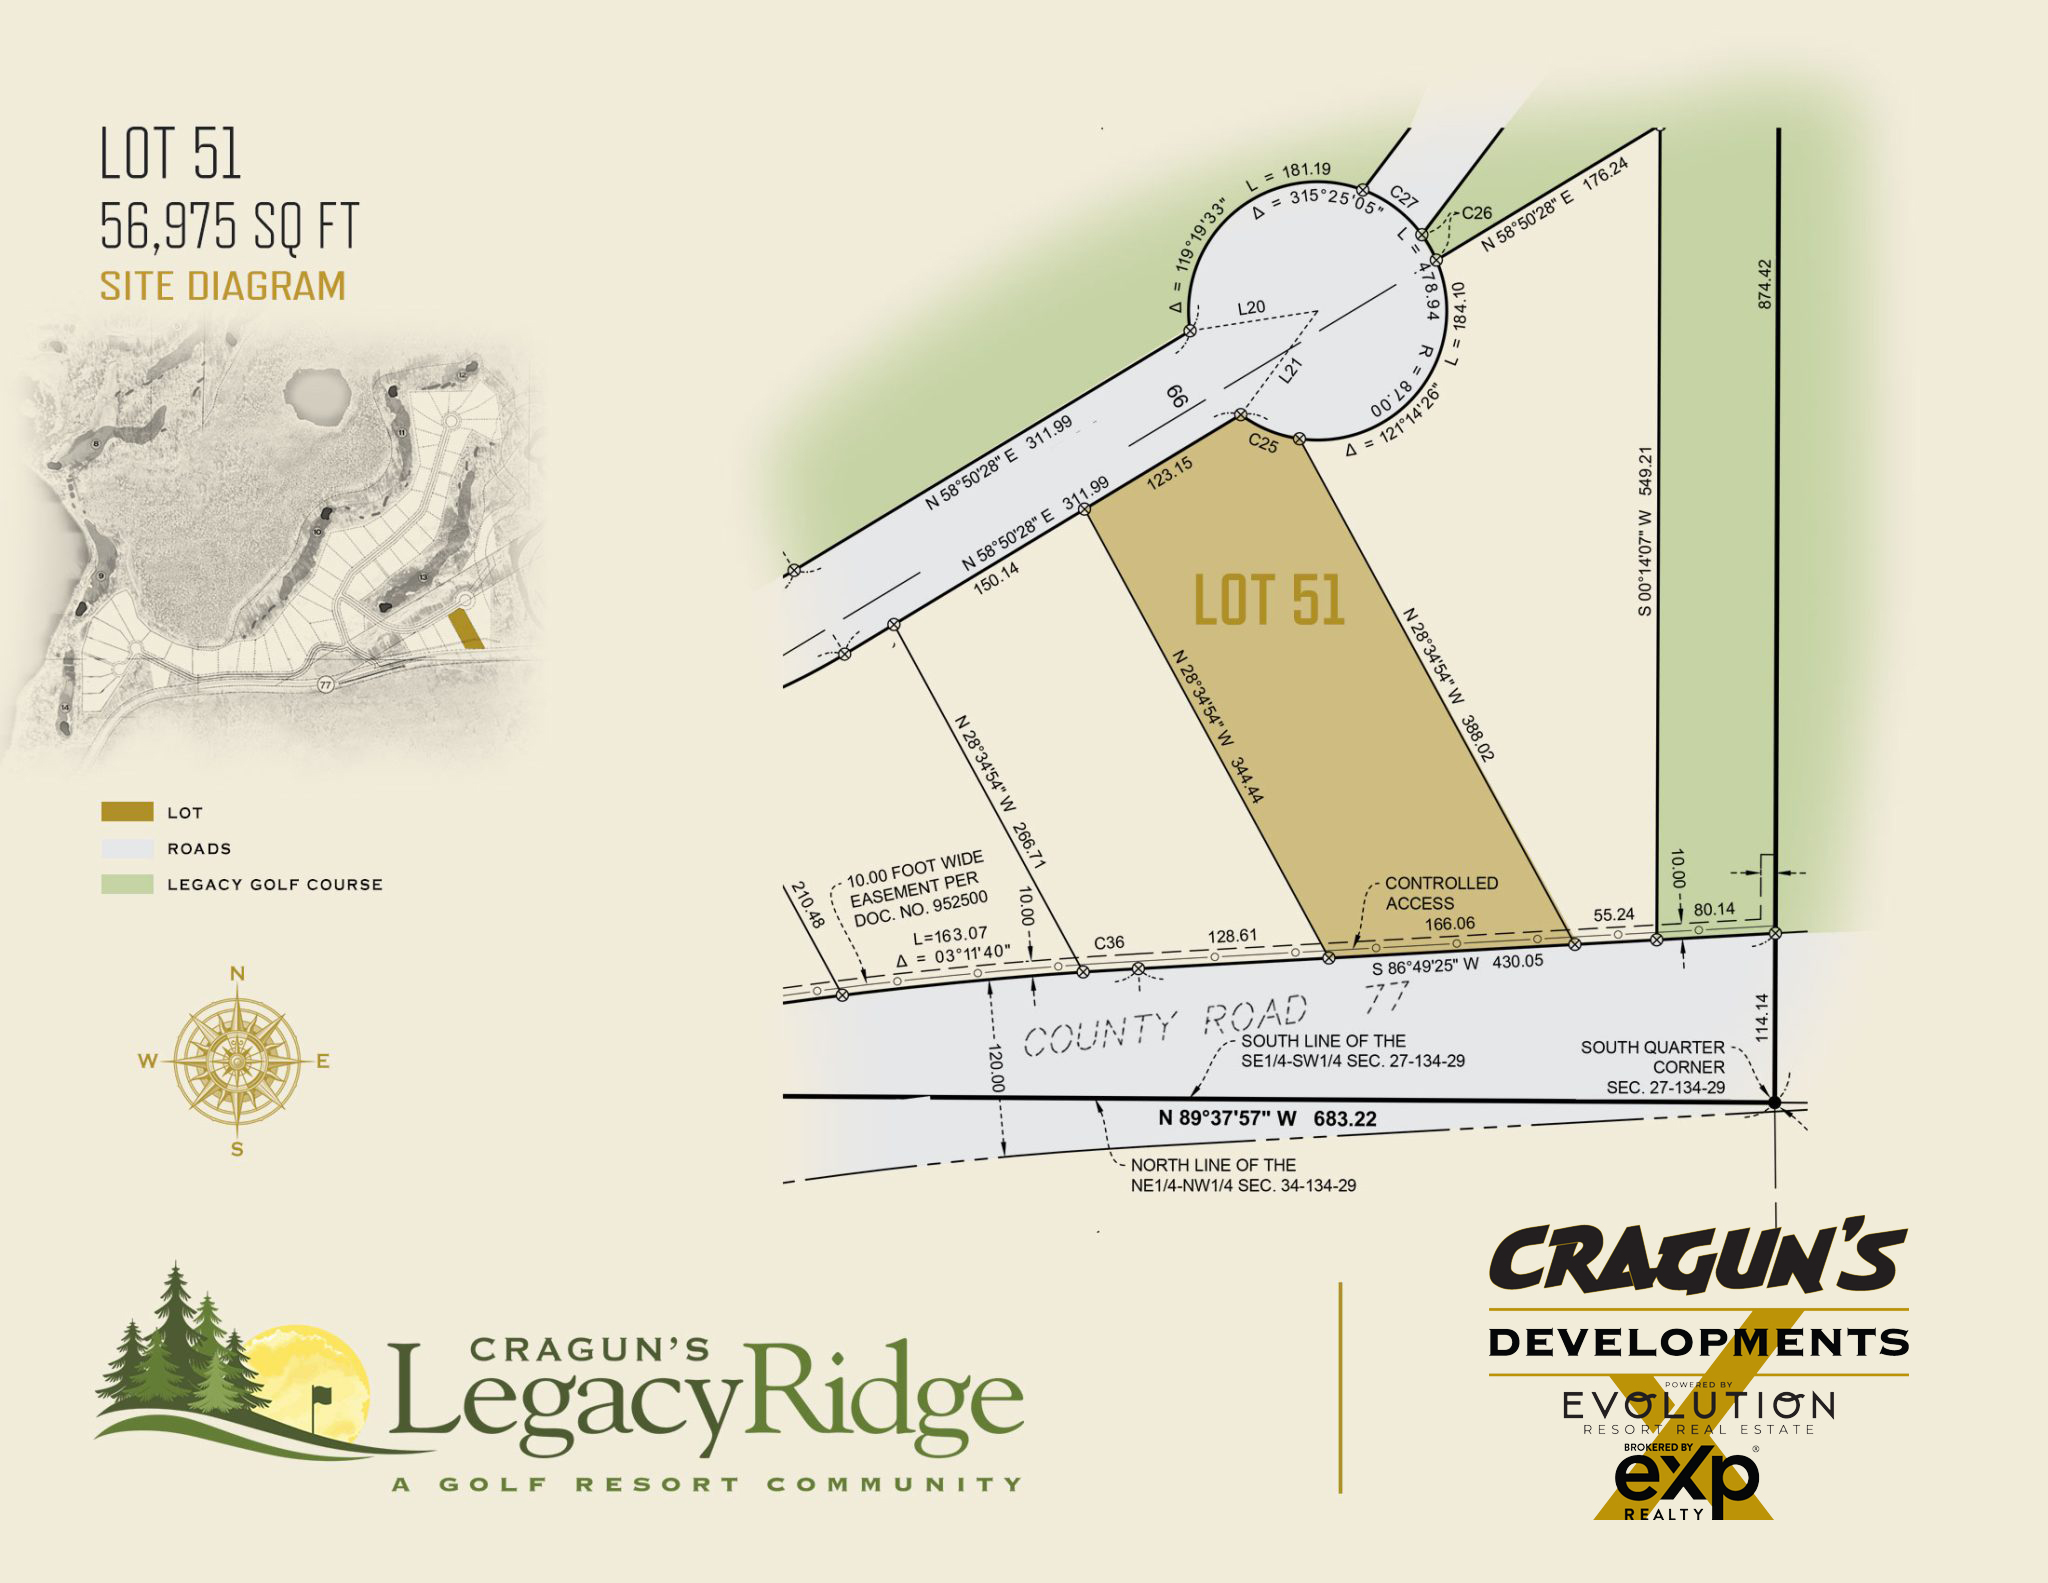 Legacy Ridge Lot 51 at Cragun's Developments in Brainerd, MN